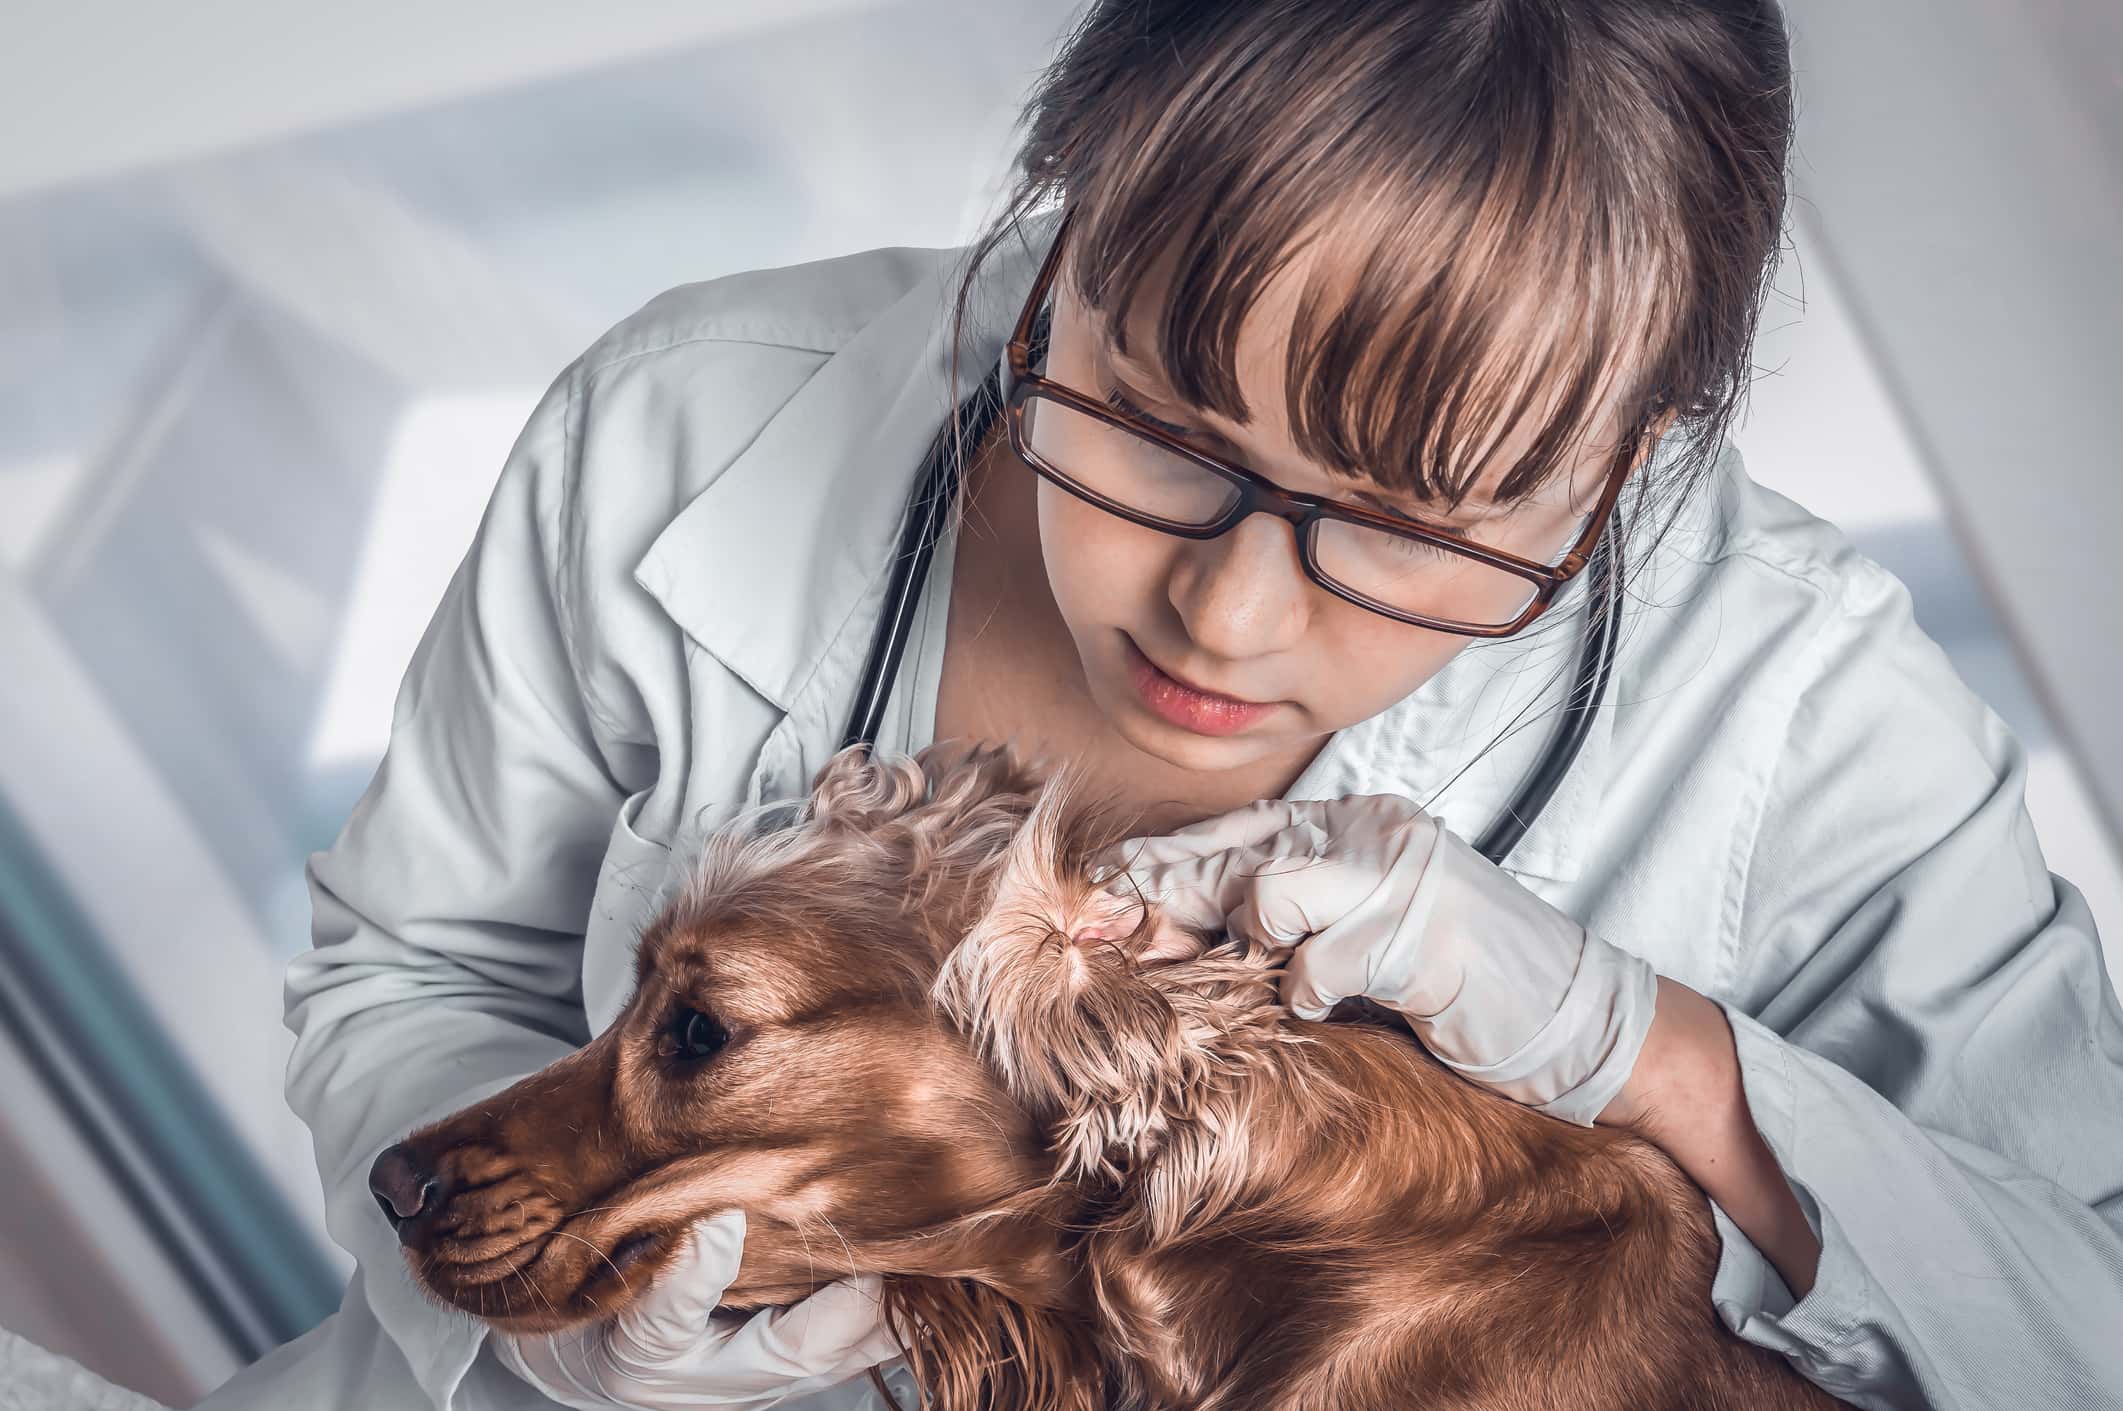 Veterinarian checks ears to a dog